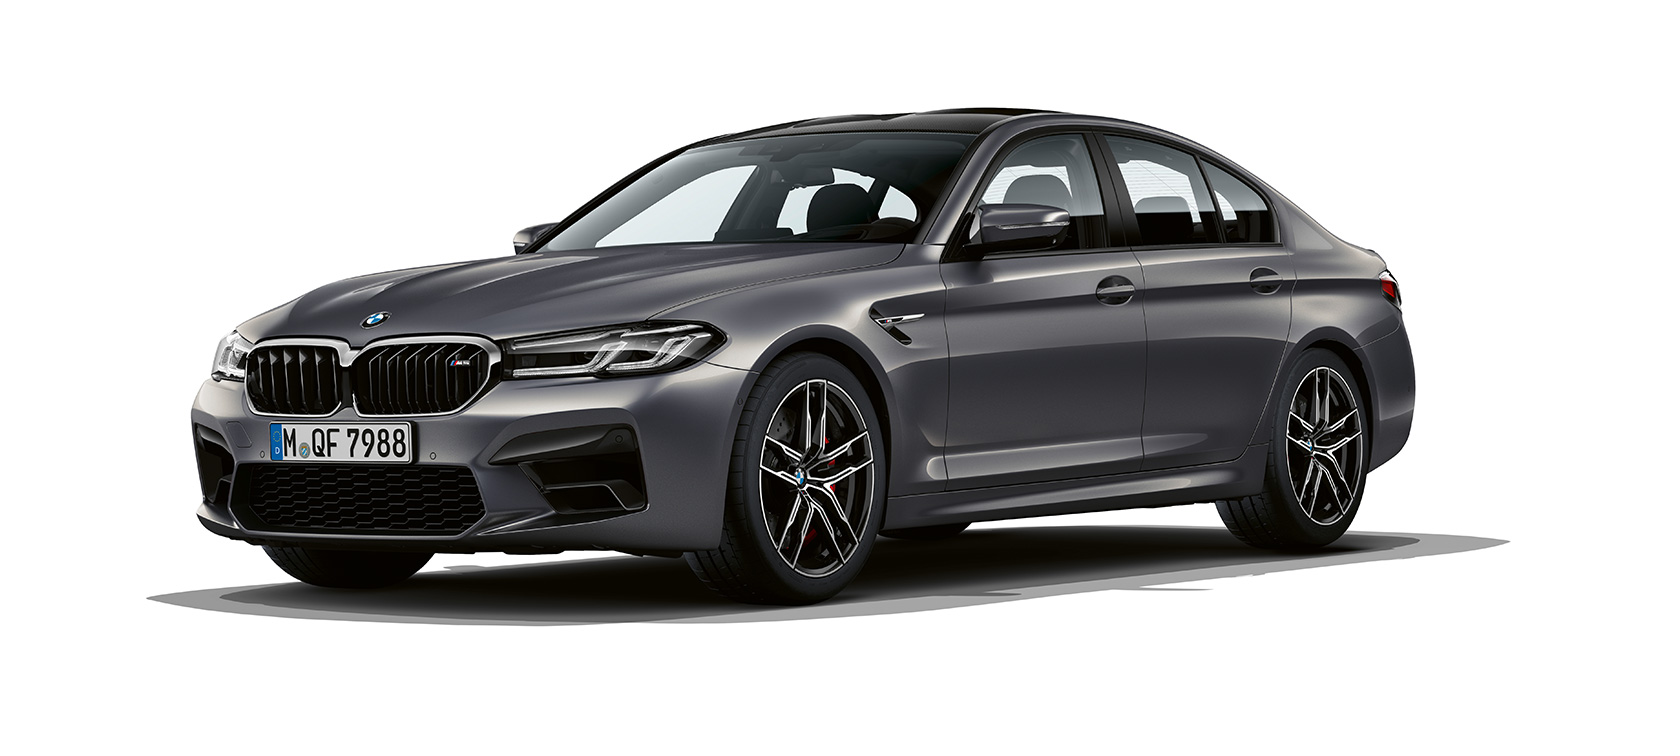 BMW M5 F90 LCI Facelift 2020 Brands Hatch Grey metallic three-quarter front view